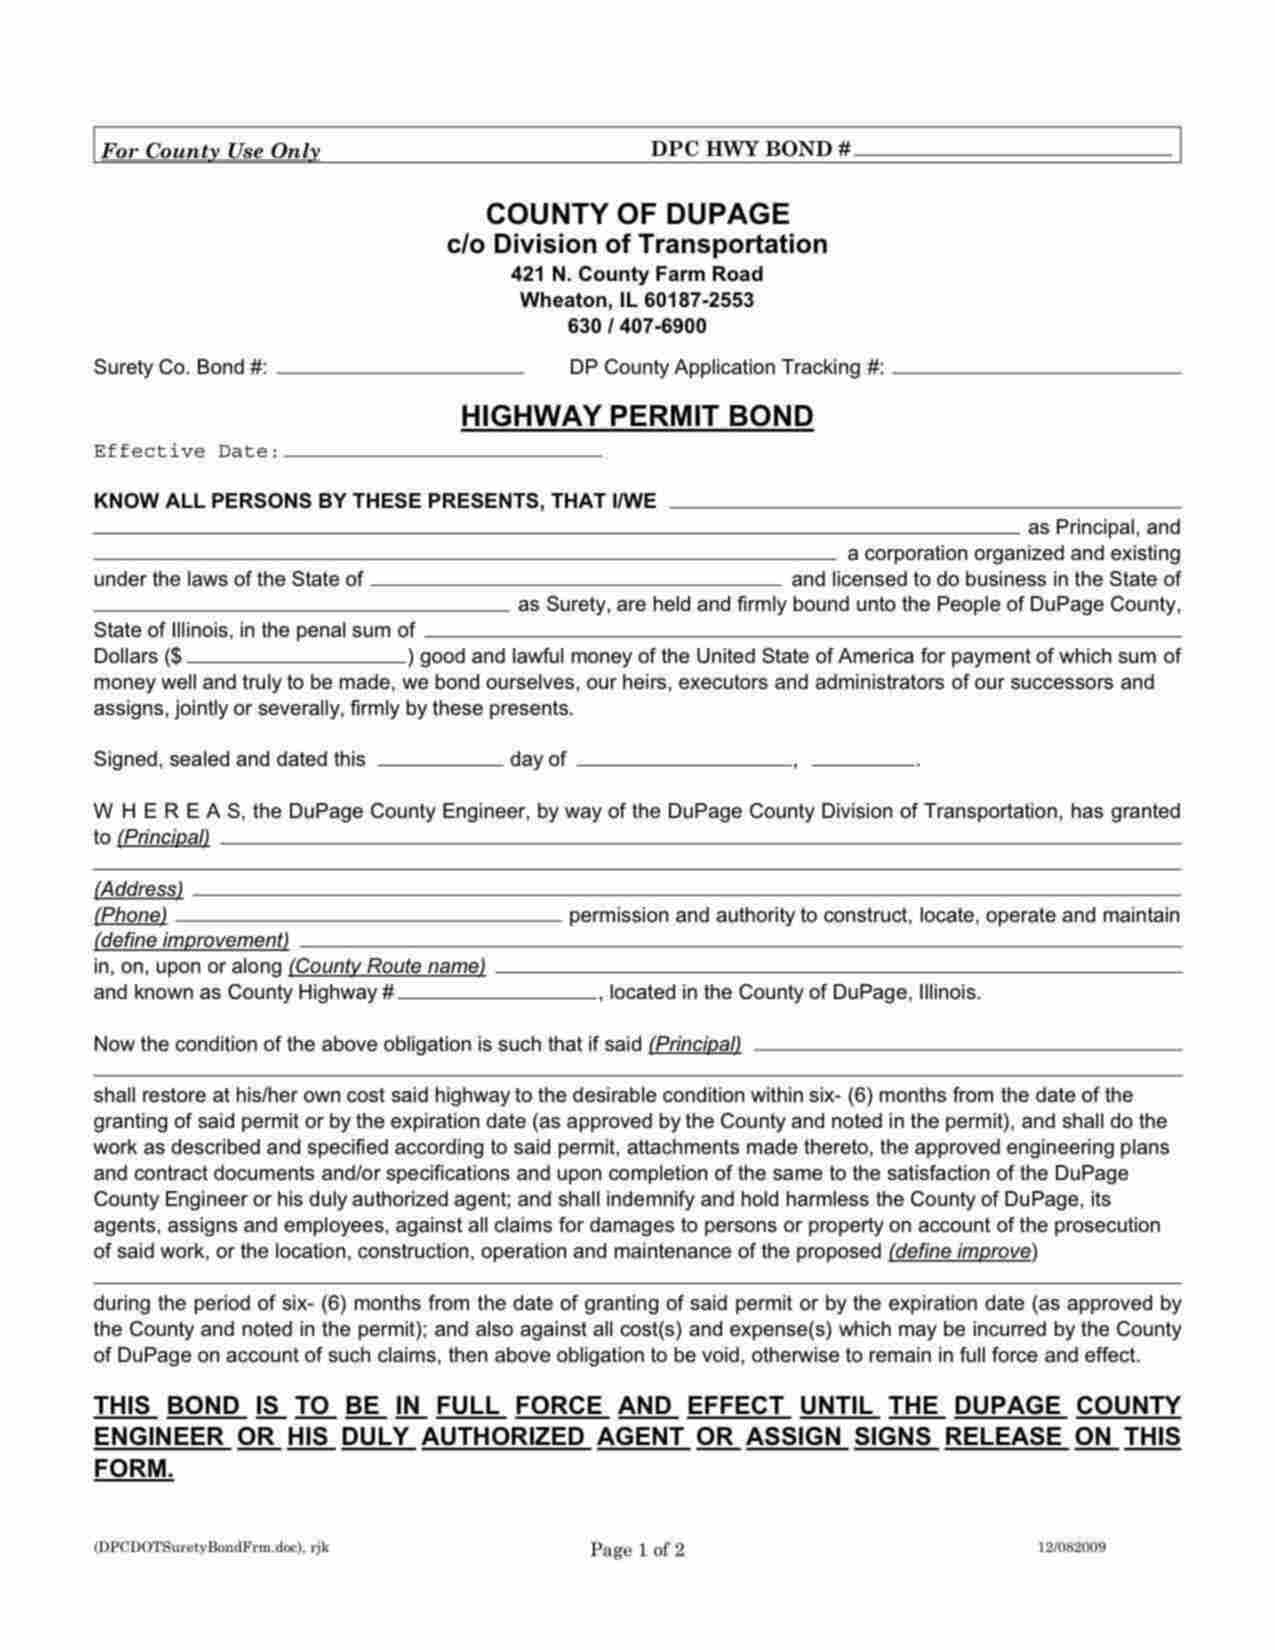 Illinois Highway Permit Bond Form